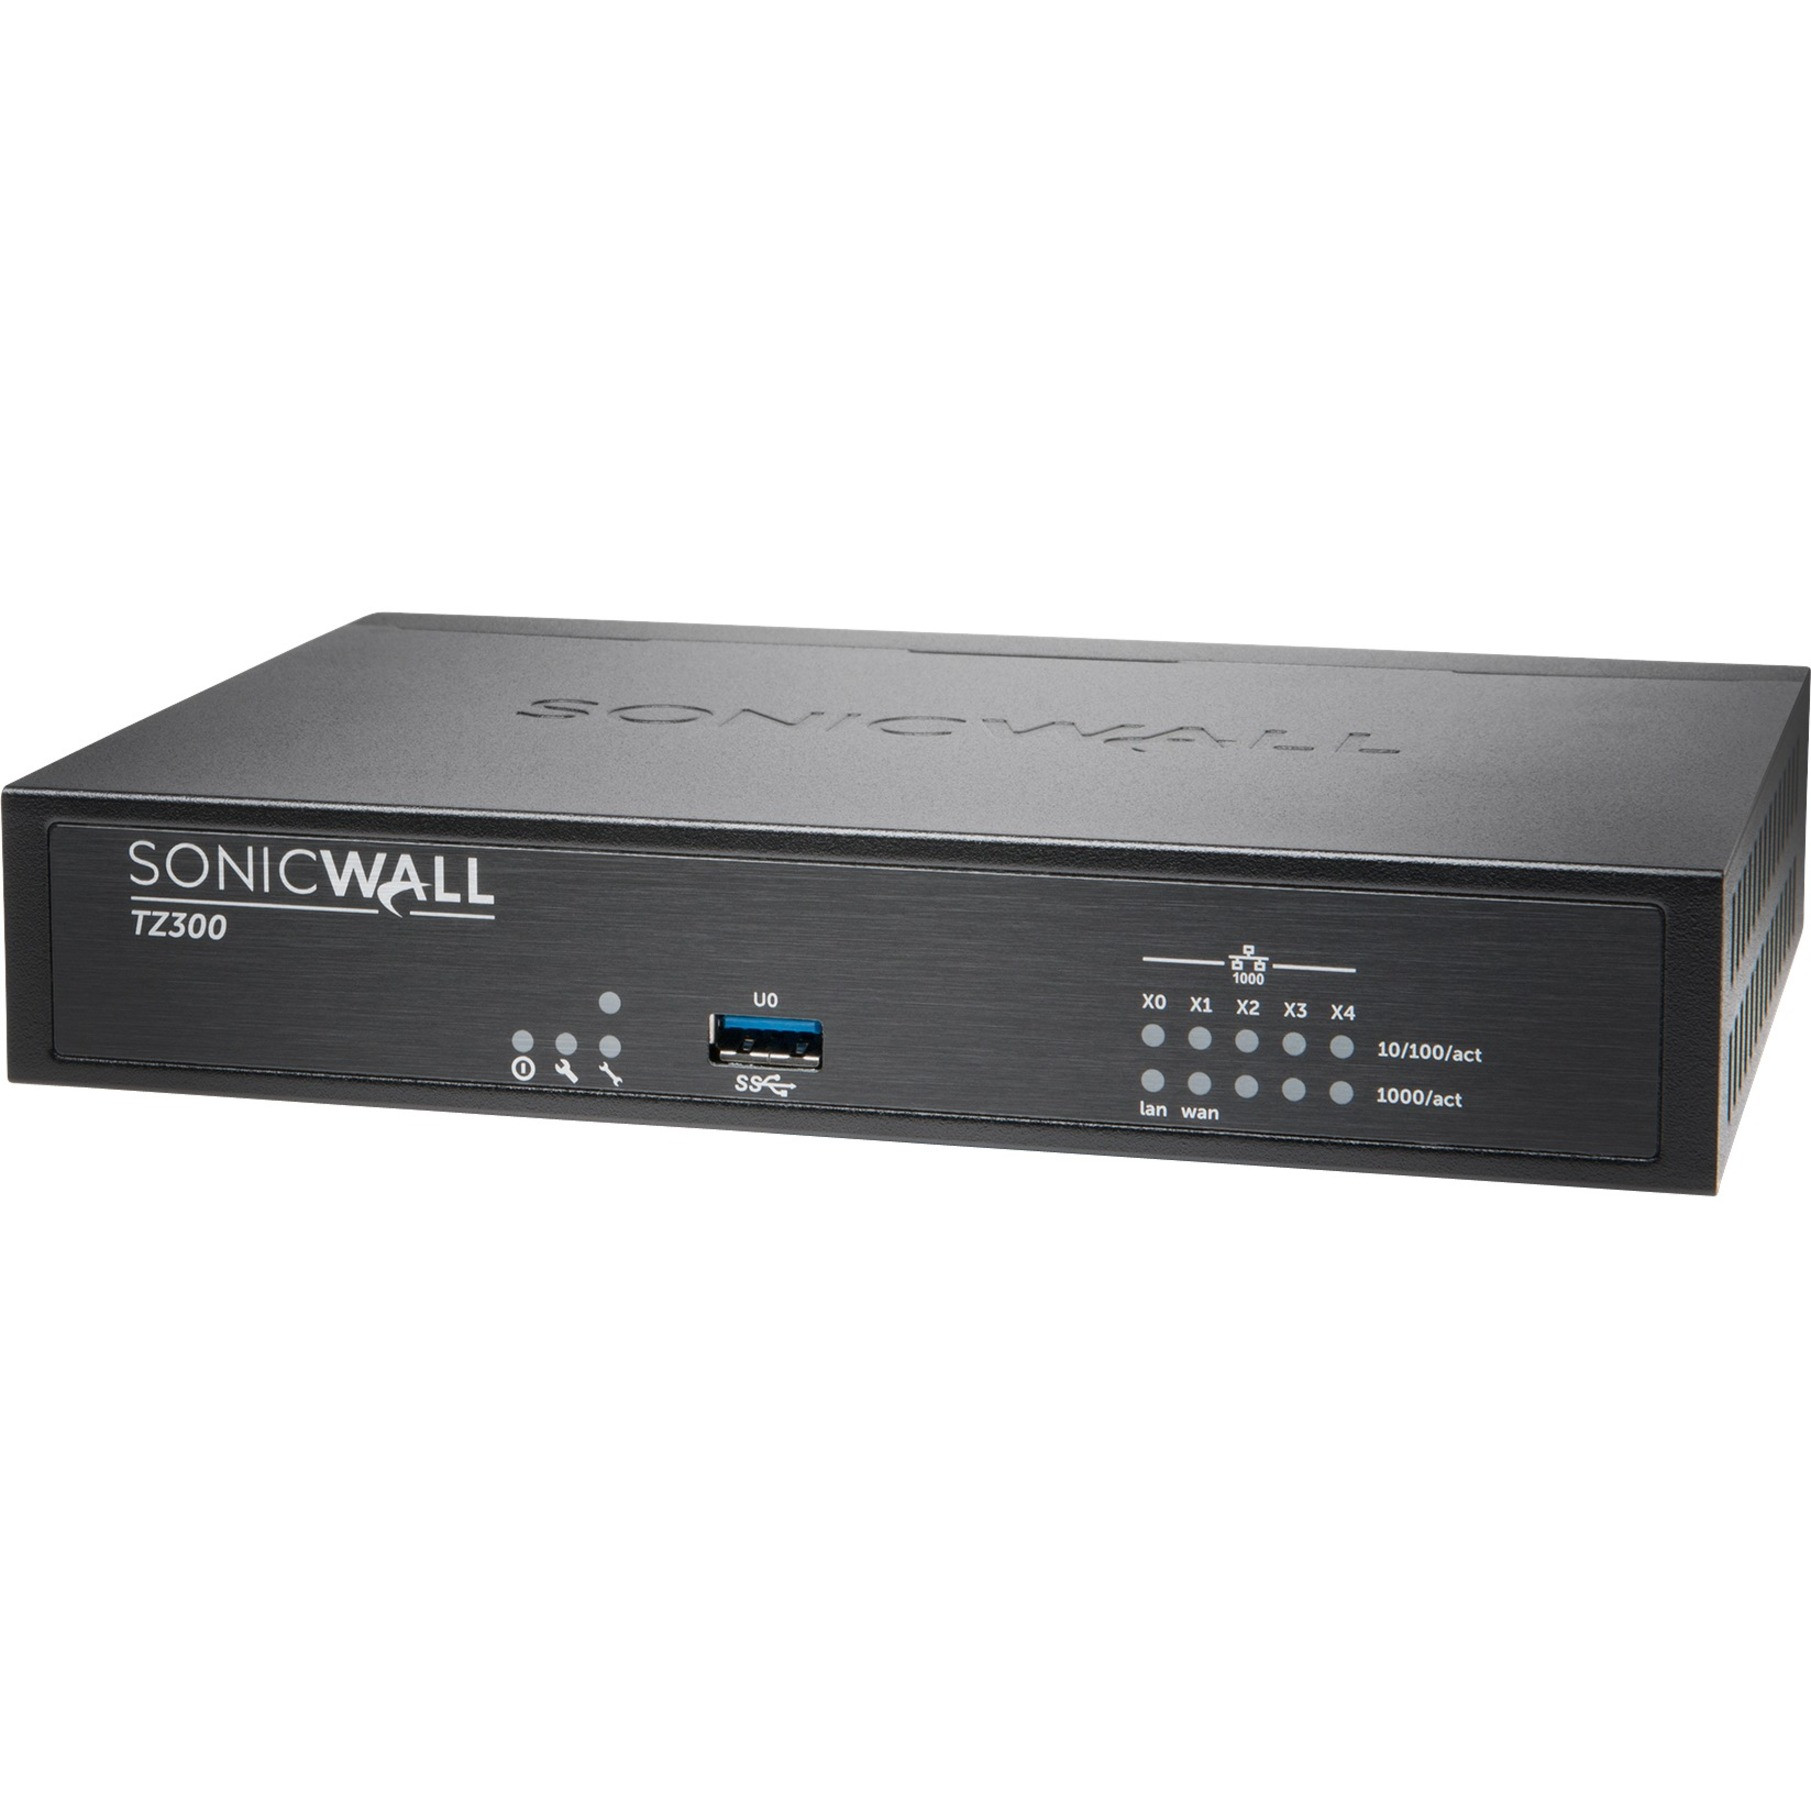 Sonicwall Tz300 Network Securityfirewall Appliance5 Port10100